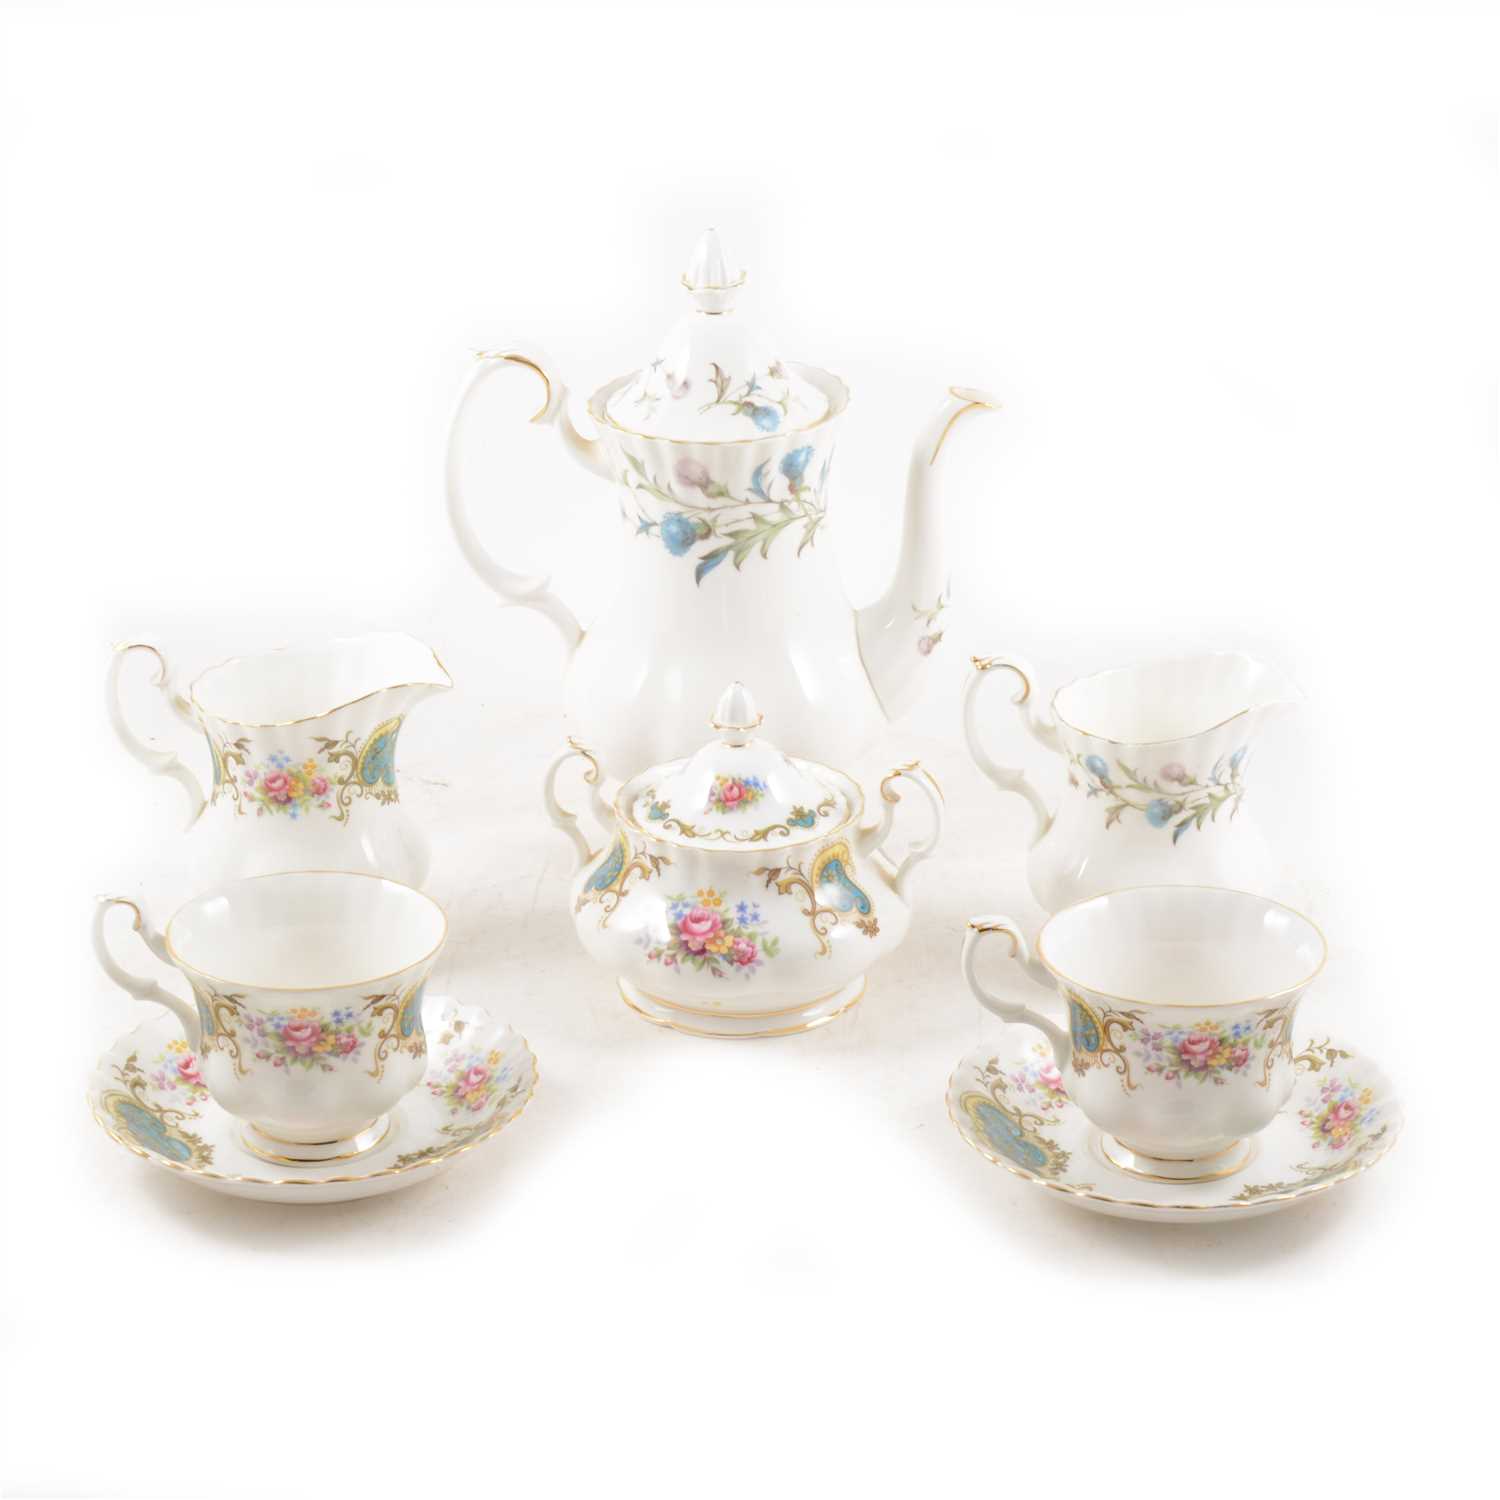 Lot 61 - Royal Albert teaware, Brigadoon and Berkeley patterns